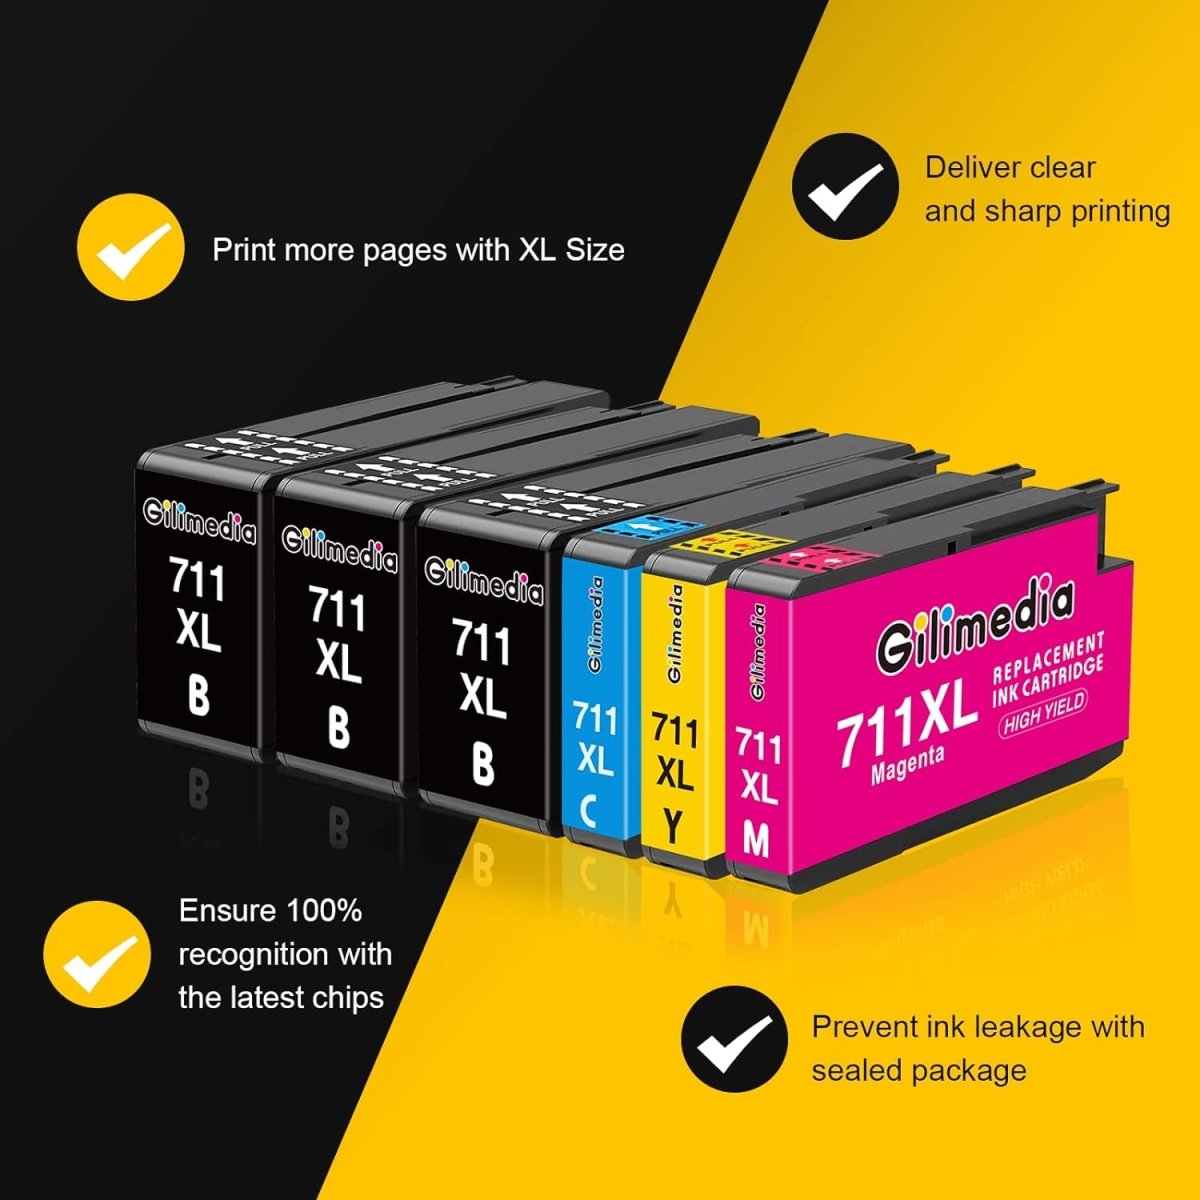 Compatible HP 711XL Ink Cartridge (3 Black, Cyan, Magenta, Yellow) - Linford Office:Printer Ink & Toner Cartridge